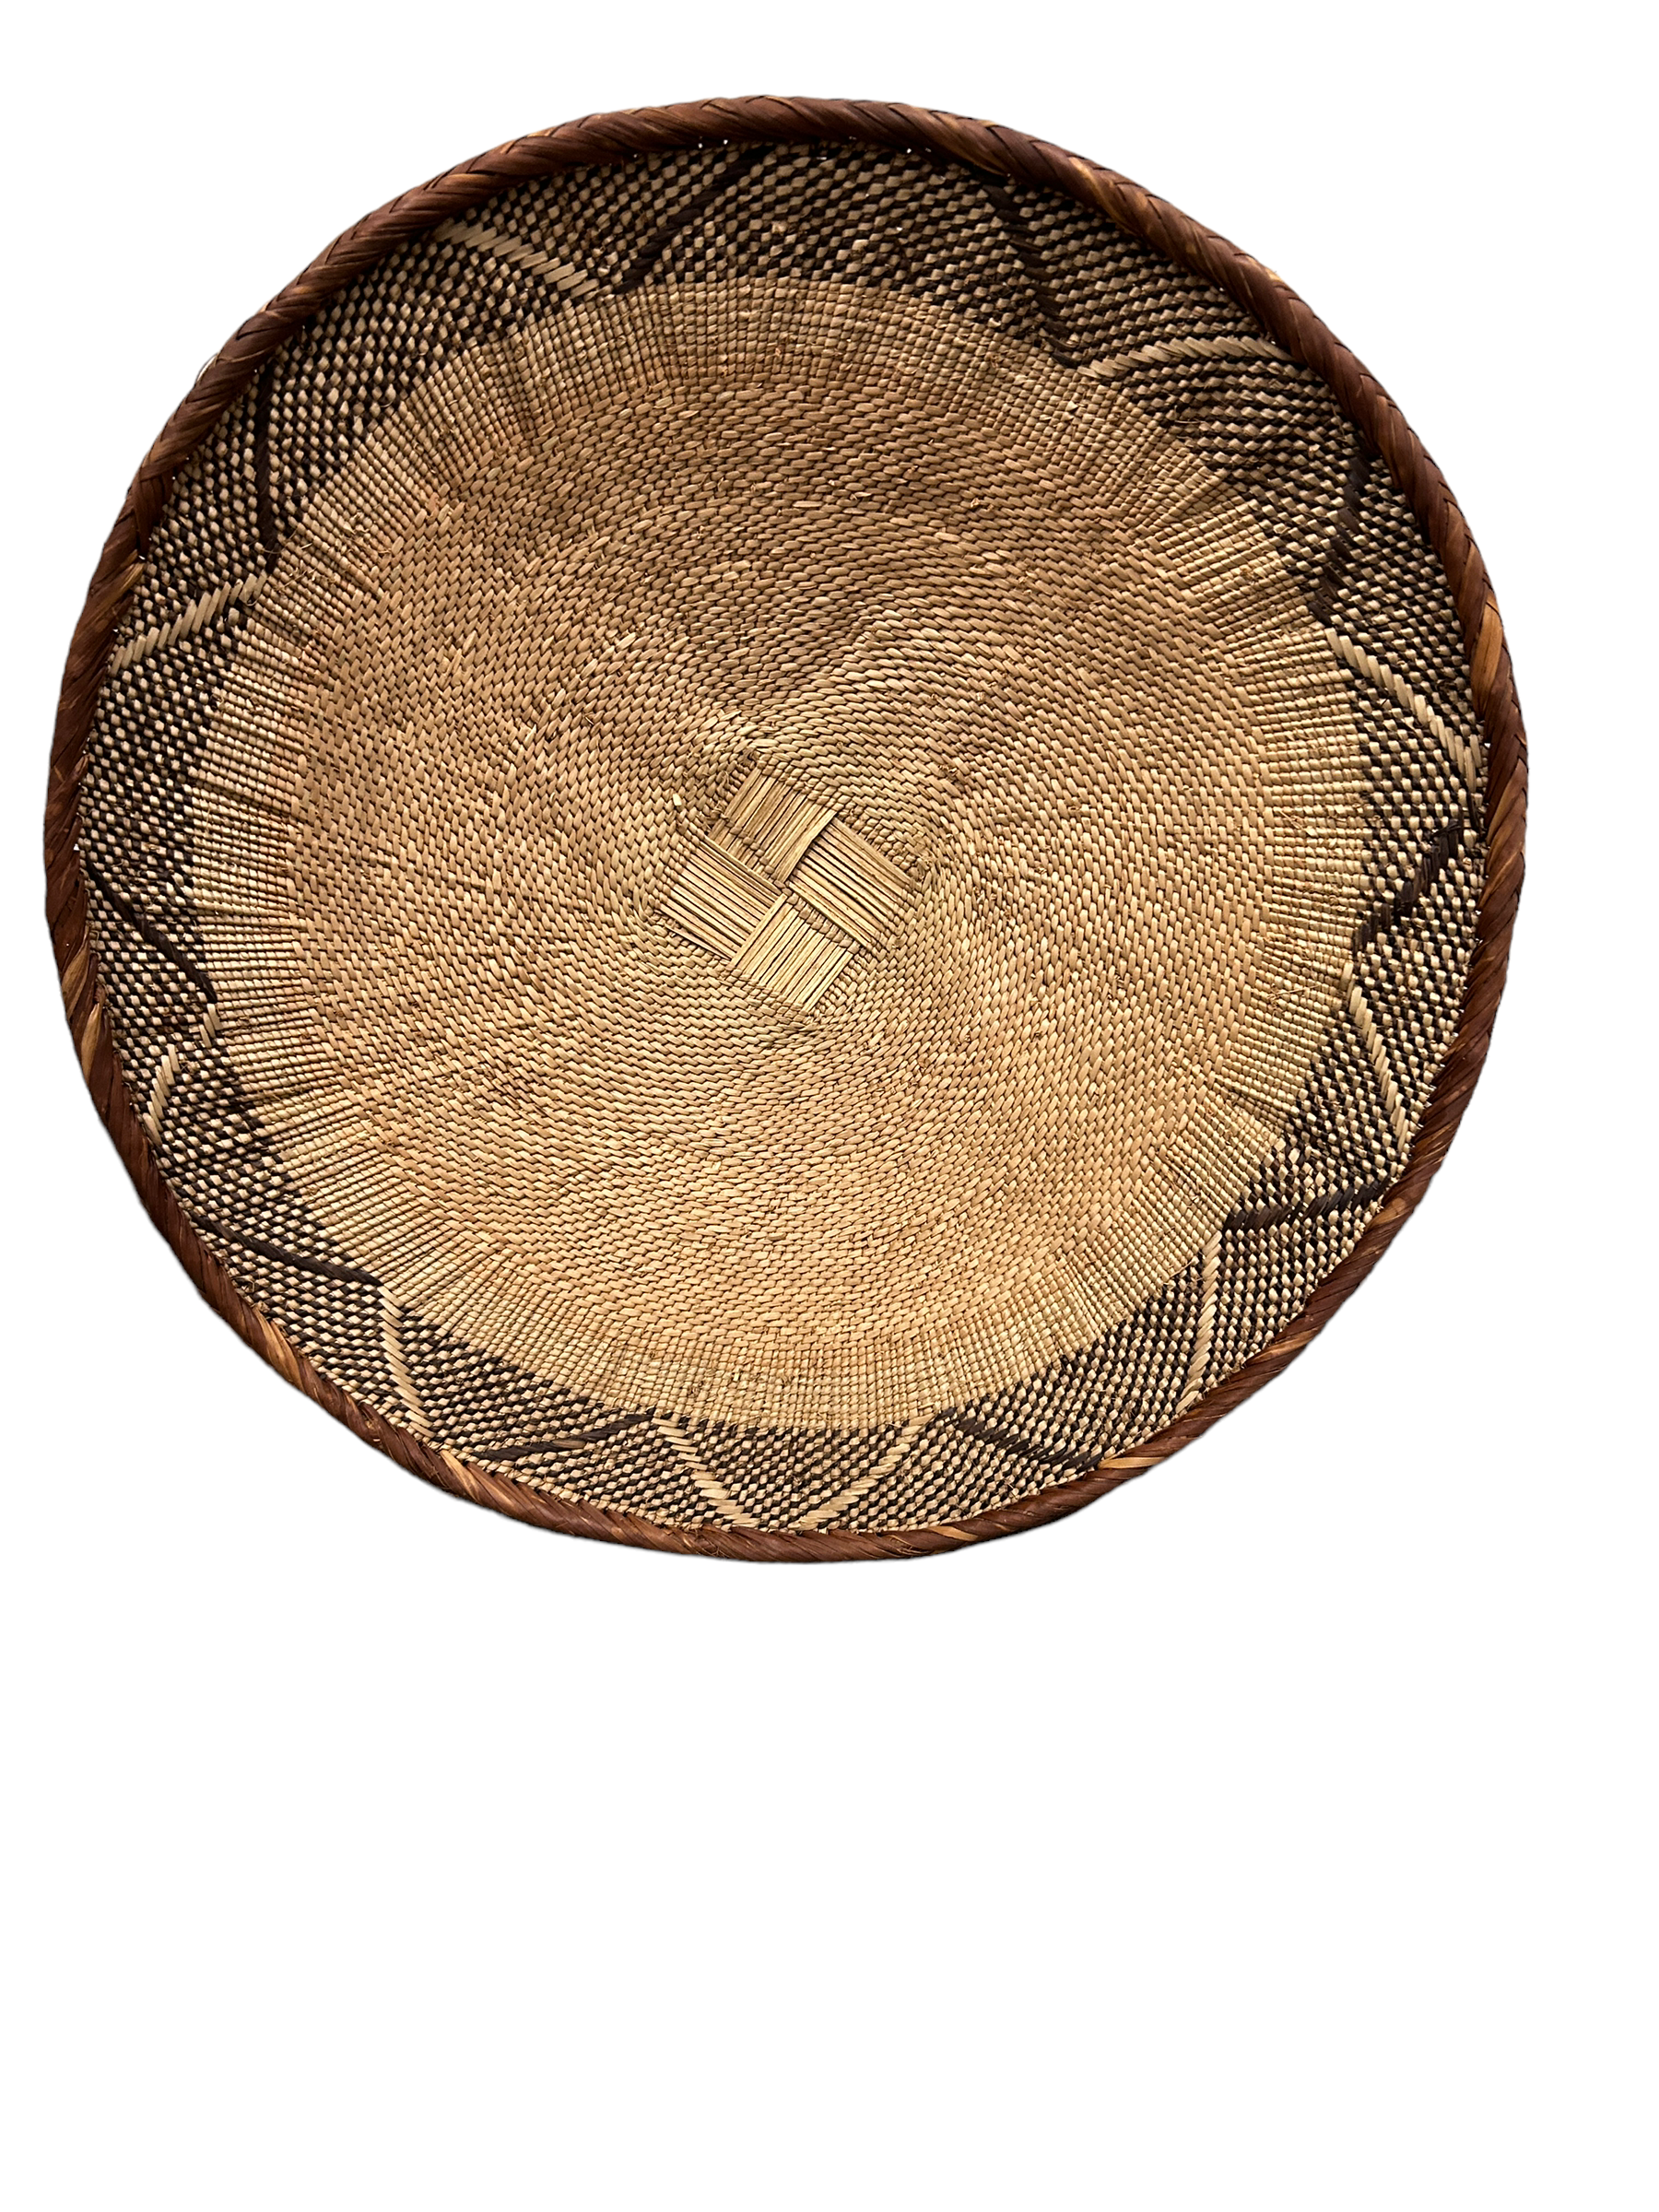 botanicalboysuk Tonga Basket Natural (45-03)